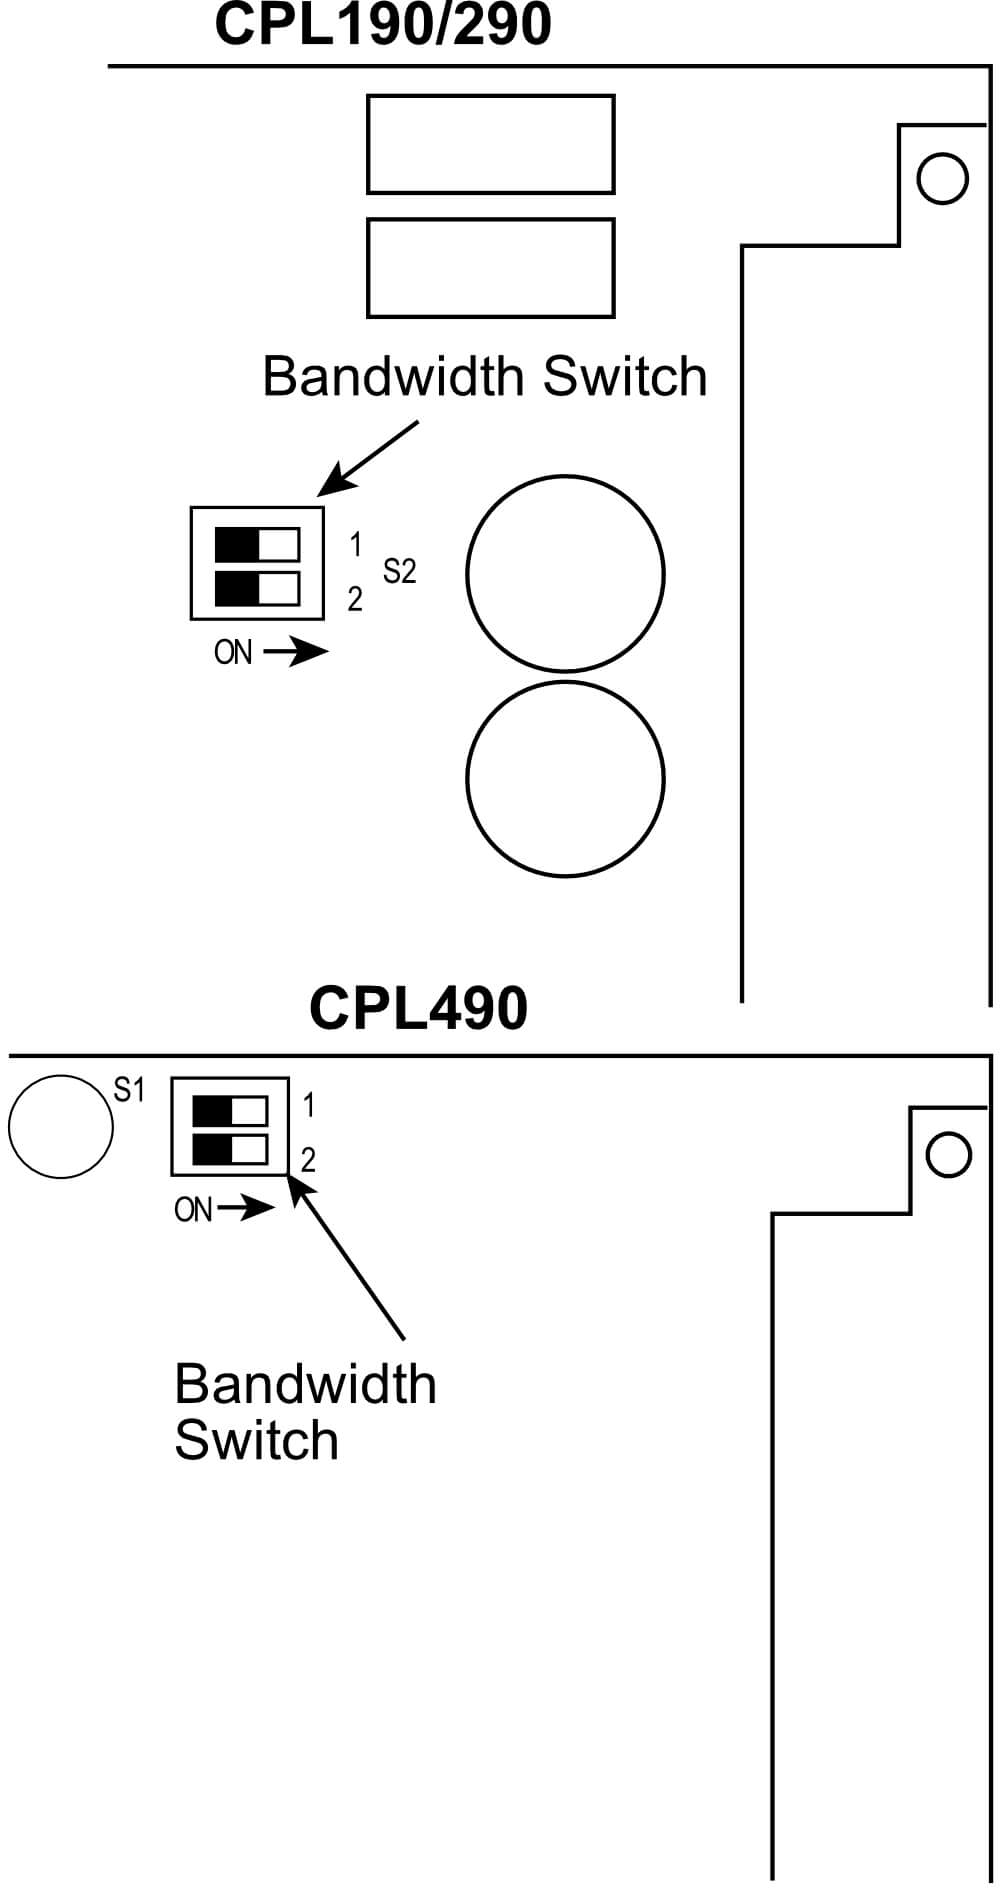 CPL190 / 290 / 490 대역폭 설정 변경